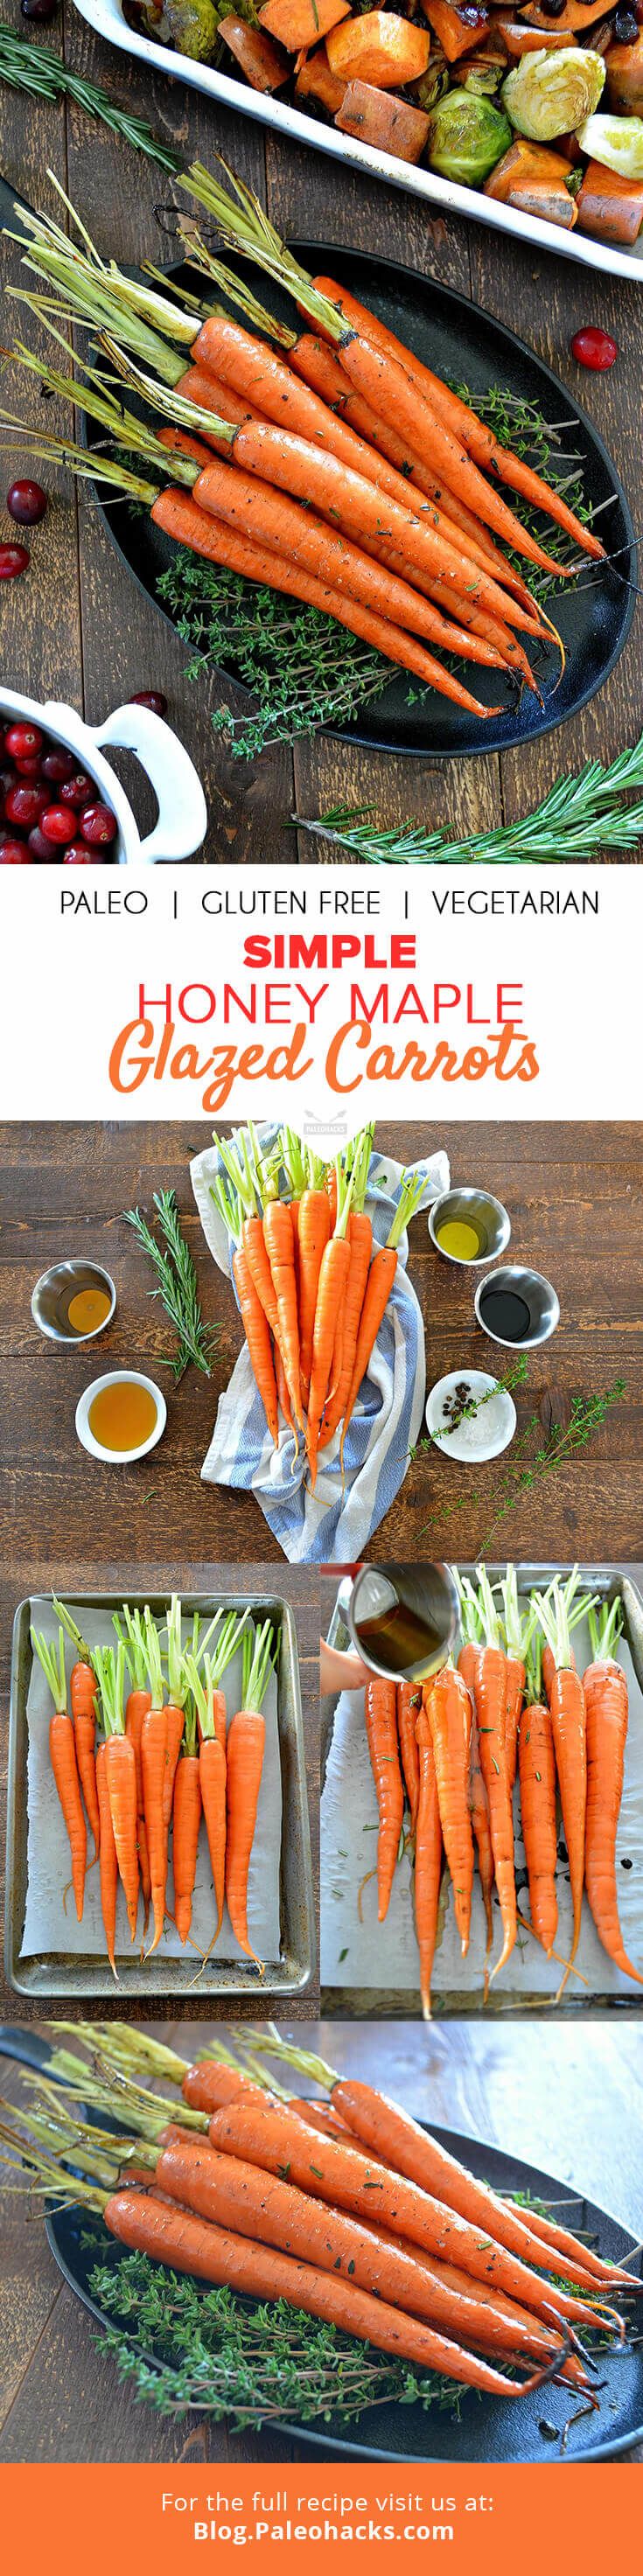 honey maple glazed carrots pin